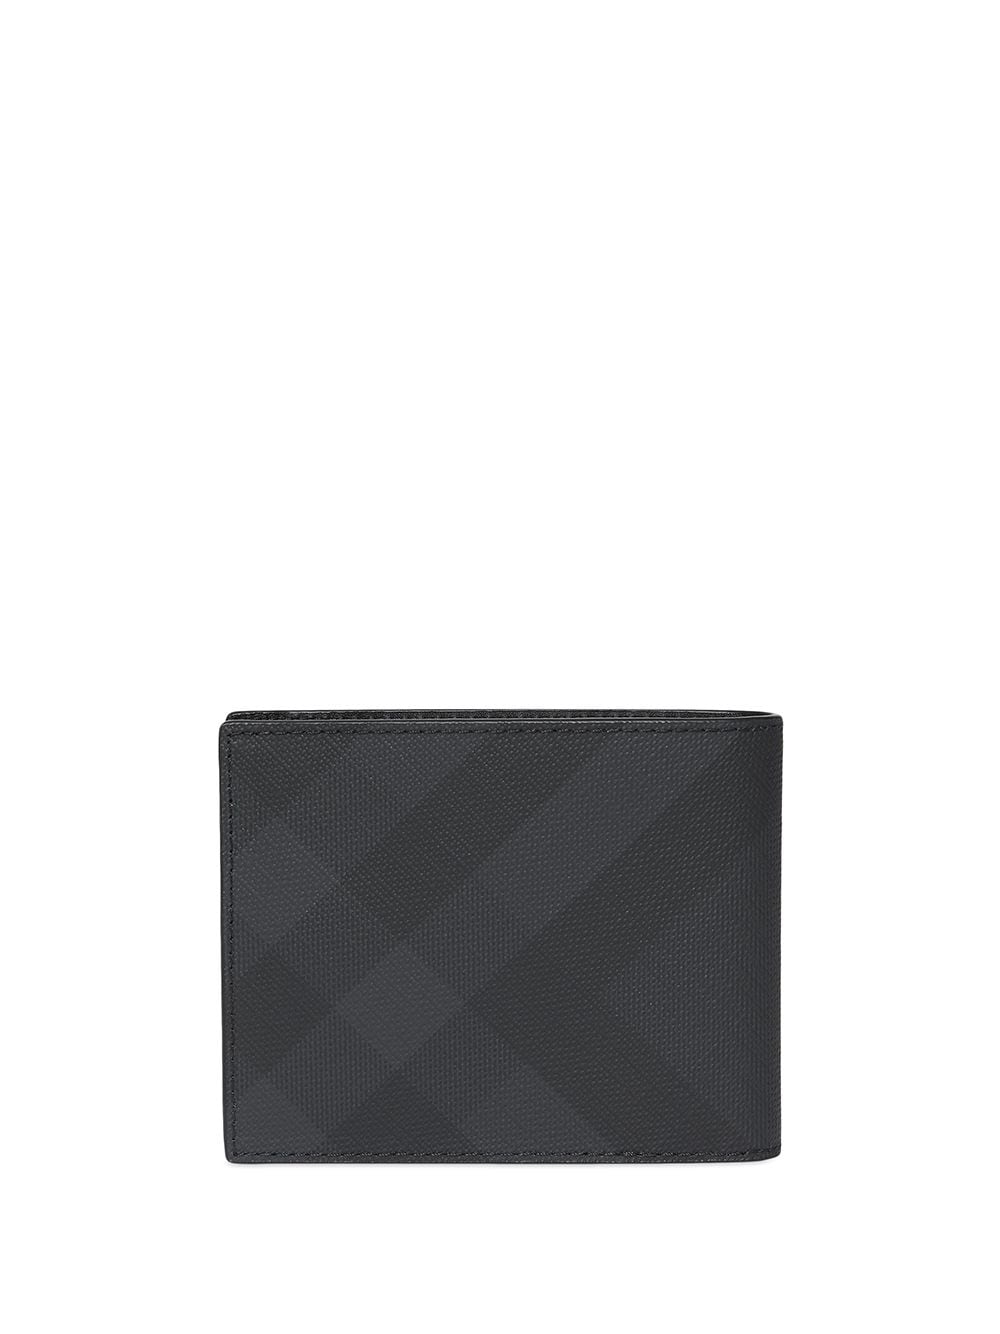 New Burberry International Bifold Black Leather Wallet 